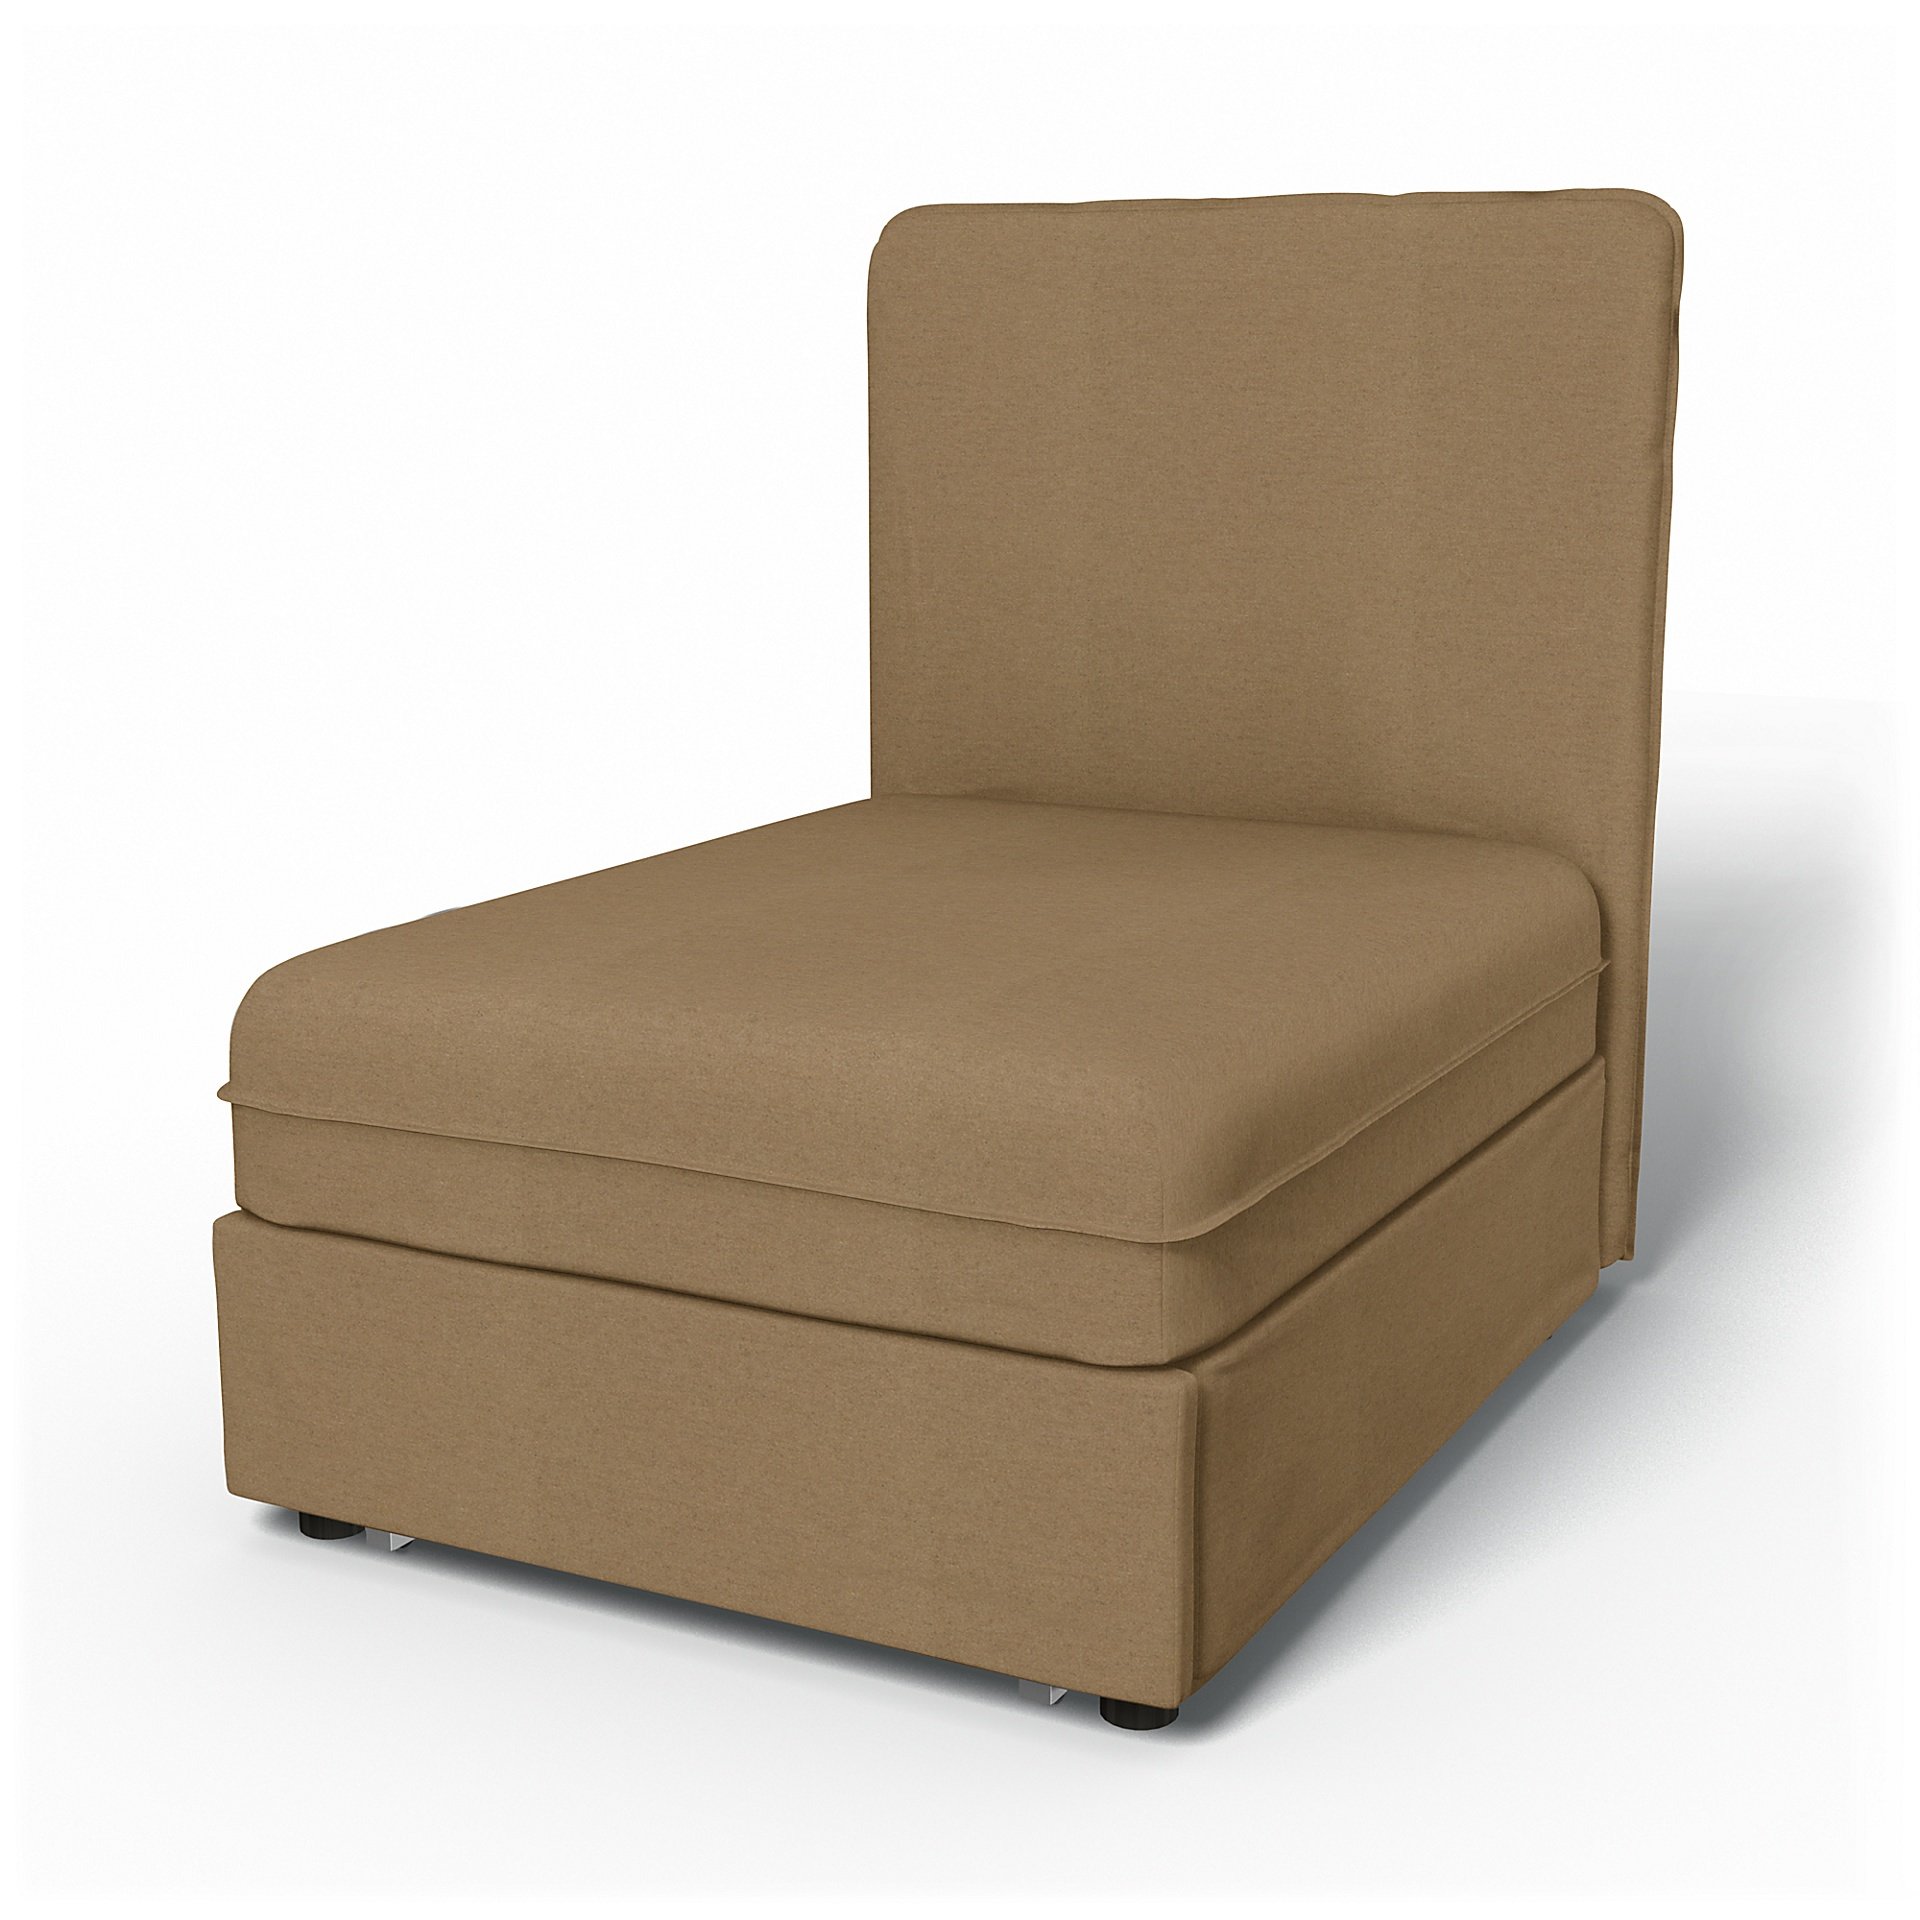 IKEA - Vallentuna Seat Module with High Back Sofa Bed Cover (80x100x46cm), Sand, Wool - Bemz